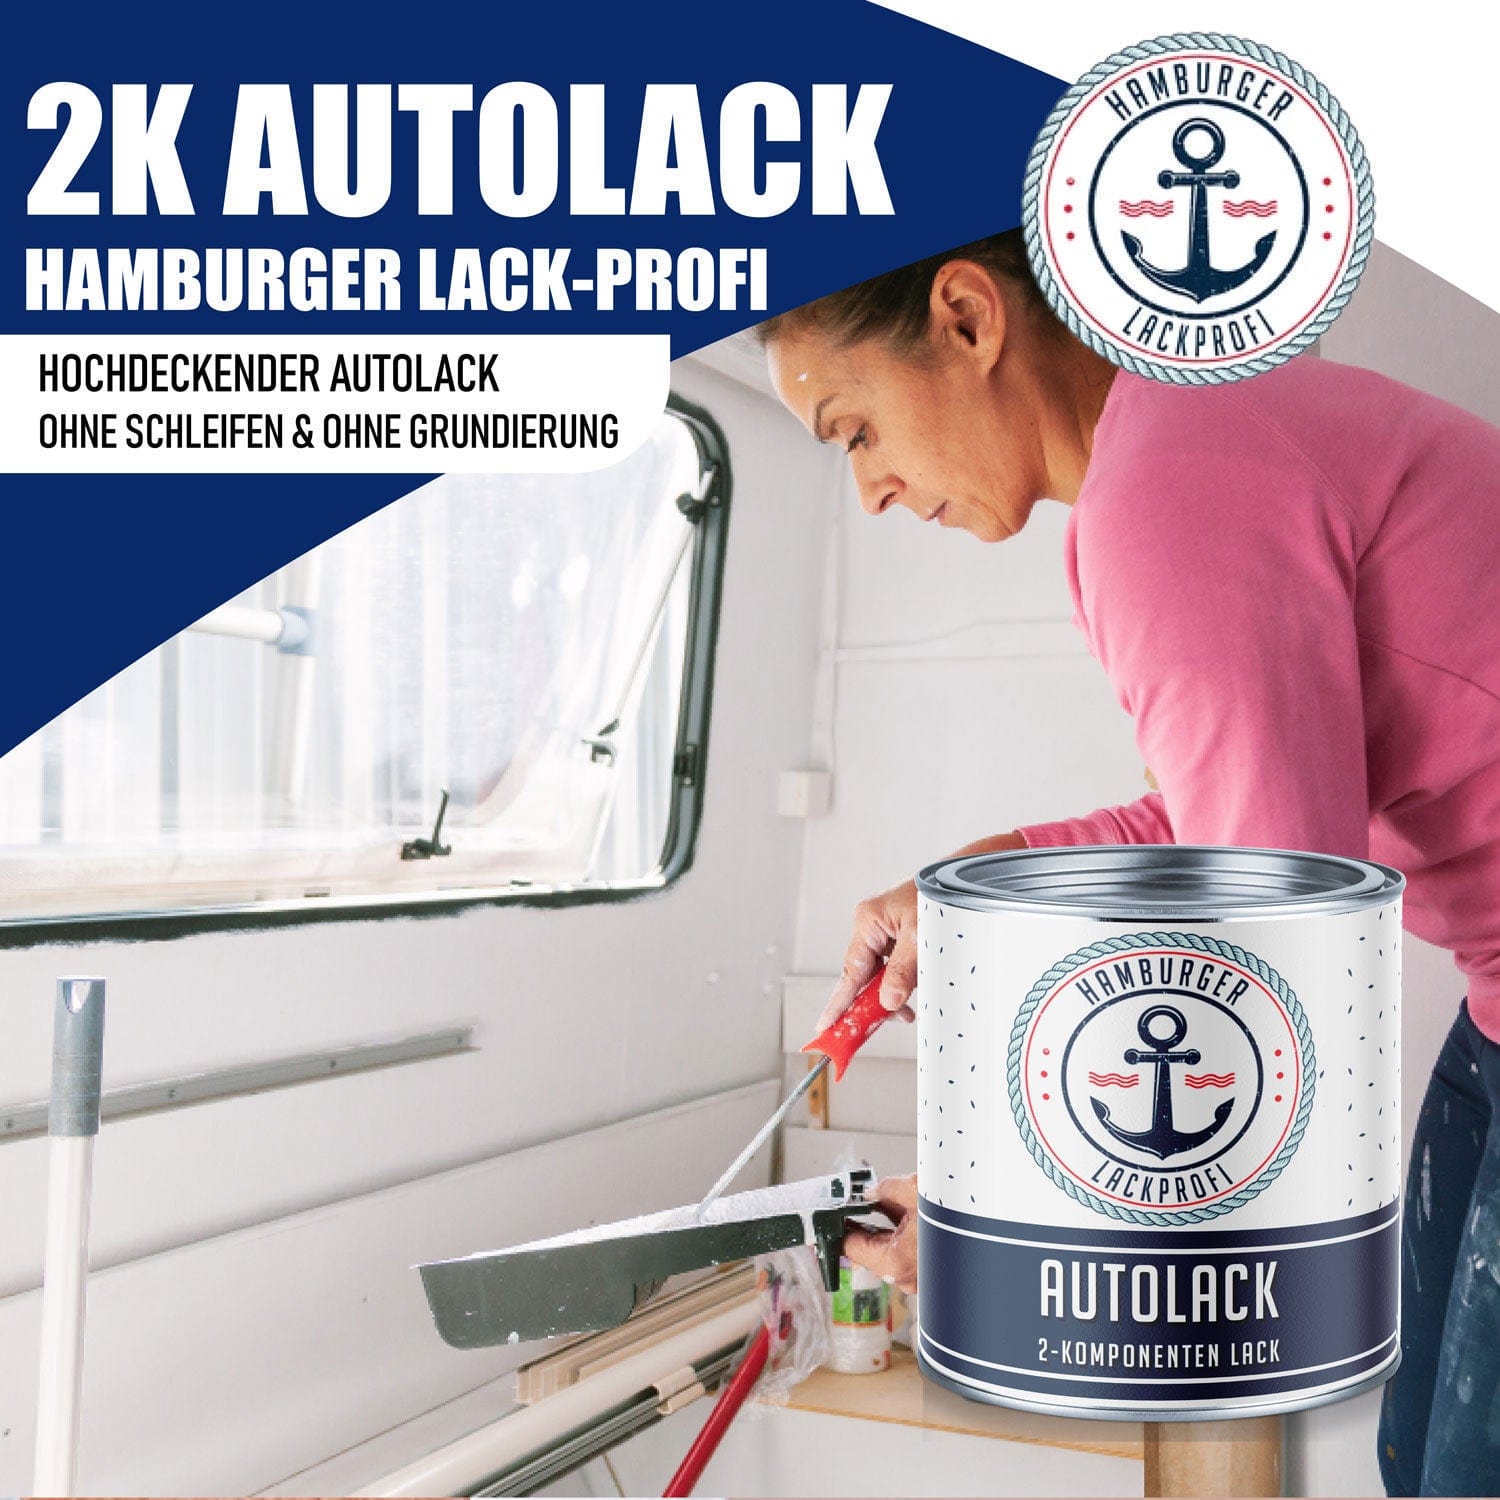 Hamburger Lack-Profi Lacke & Beschichtungen Hamburger Lack-Profi 2K Autolack in Signalblau RAL 5005 mit Lackierset (X300) & Verdünnung (1 L) - 30% Sparangebot